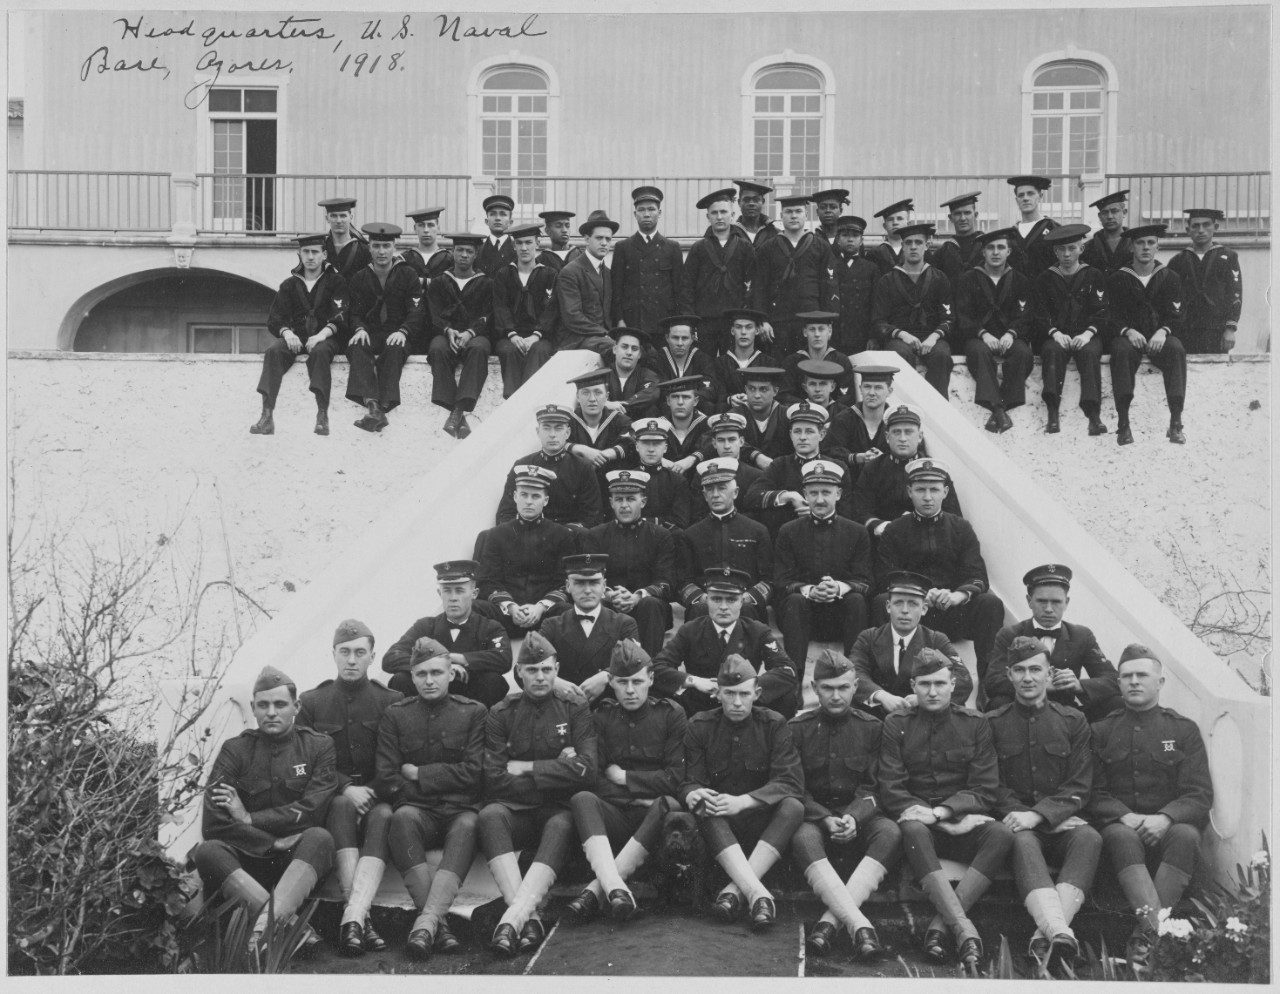 Headquarters, U.S. Naval Base, Ponta Delgada, Azores, Portugal. 1918